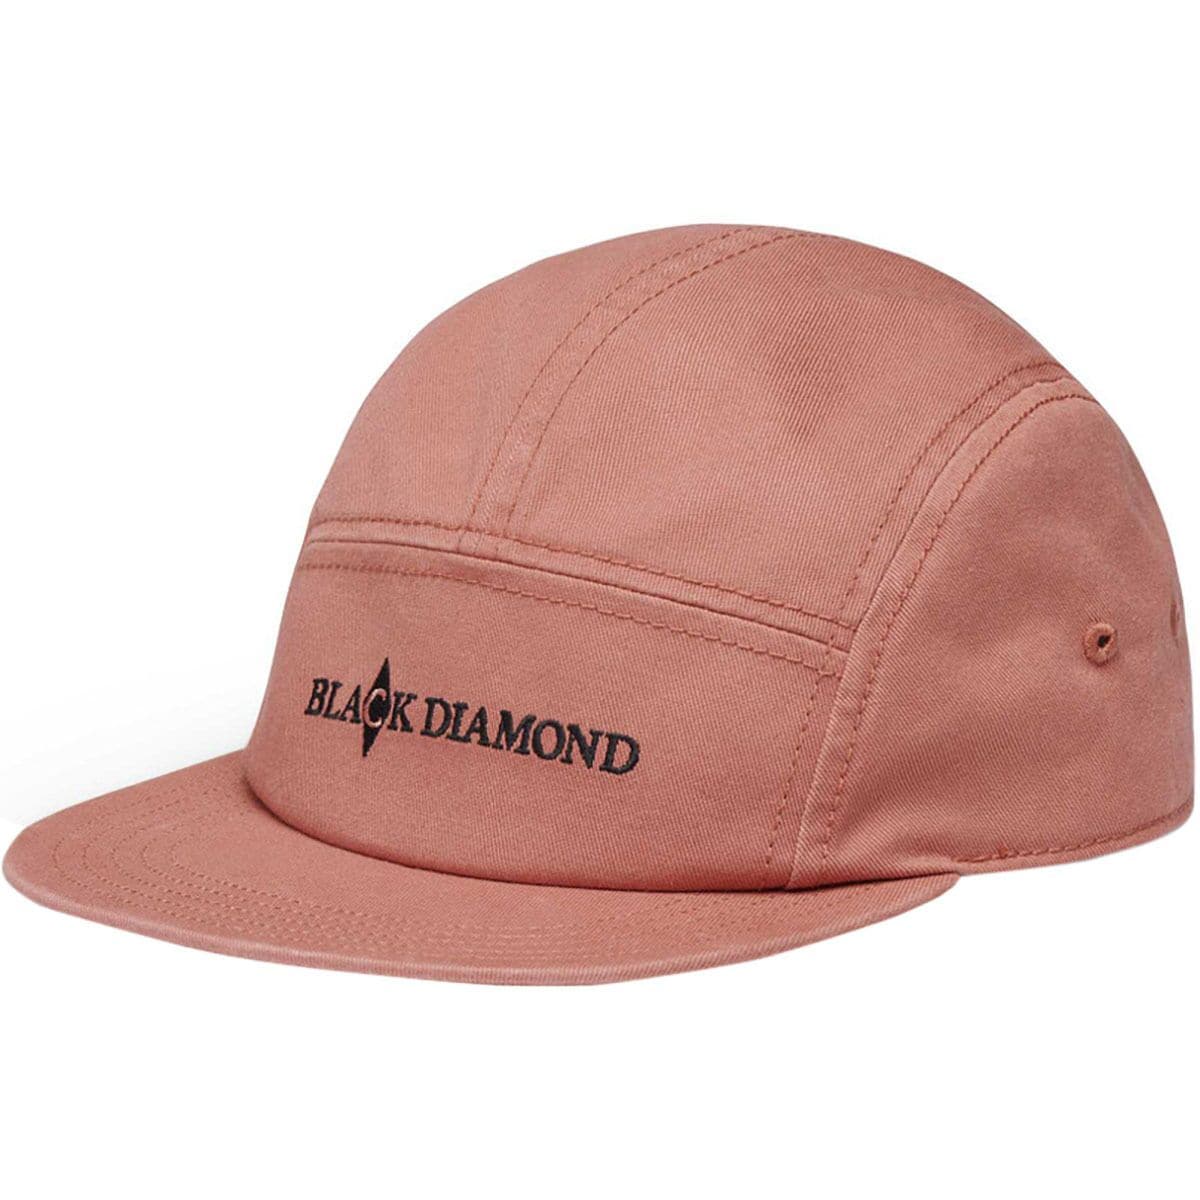 Кэмпер кепка Black Diamond, розовый